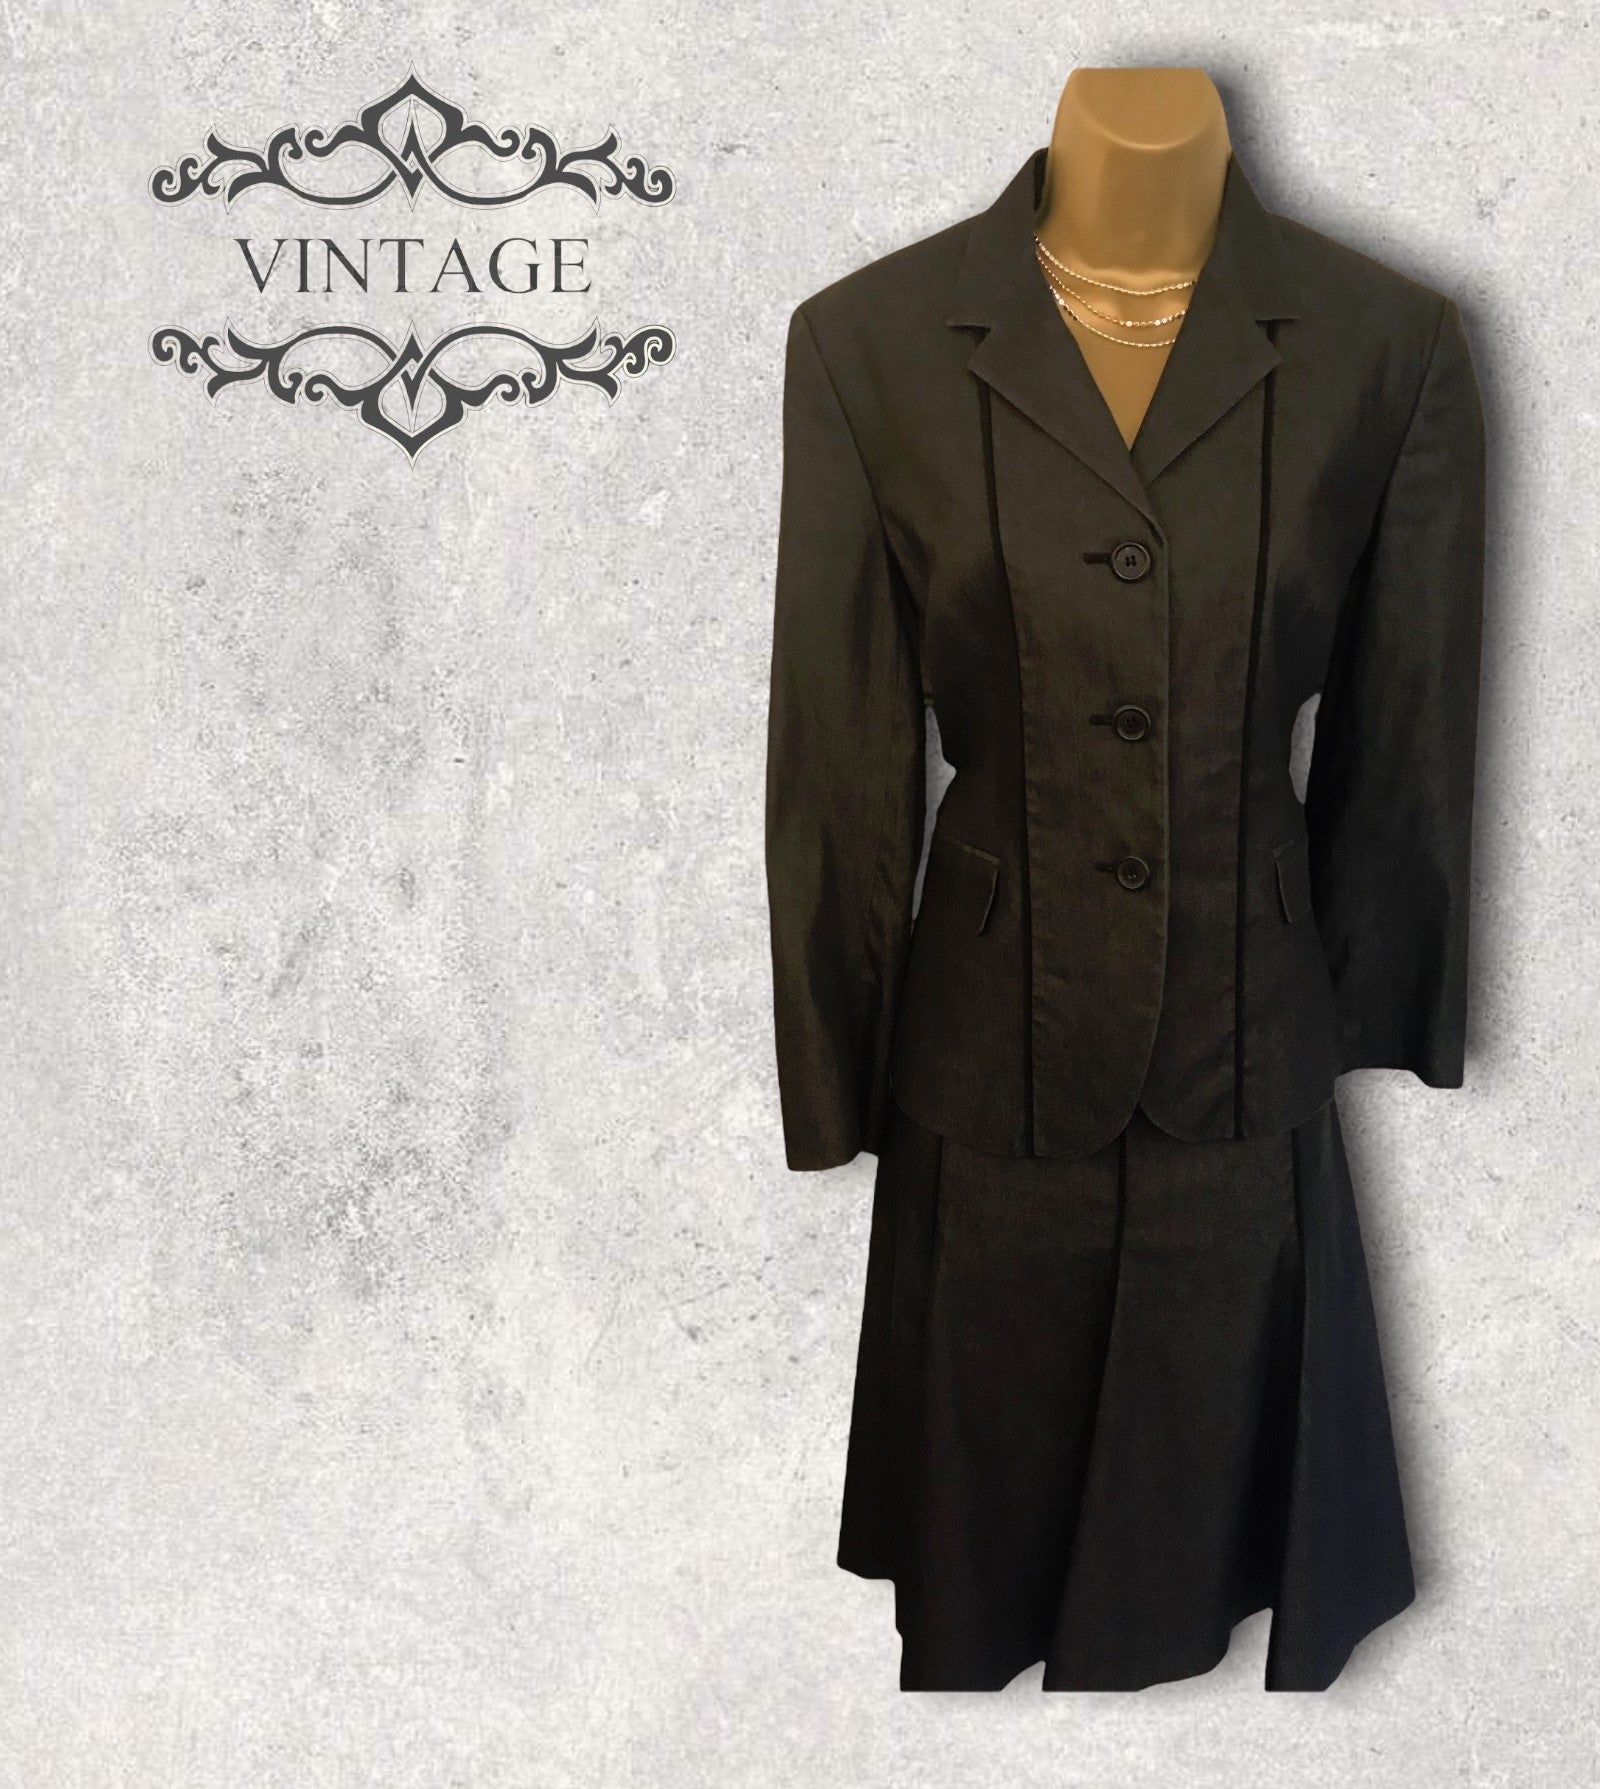 Nicole Farhi Grey Vintage Cotton Mix Bardot Dress & Jacket UK 8/10 US 4/6 EU 36/38 Timeless Fashions